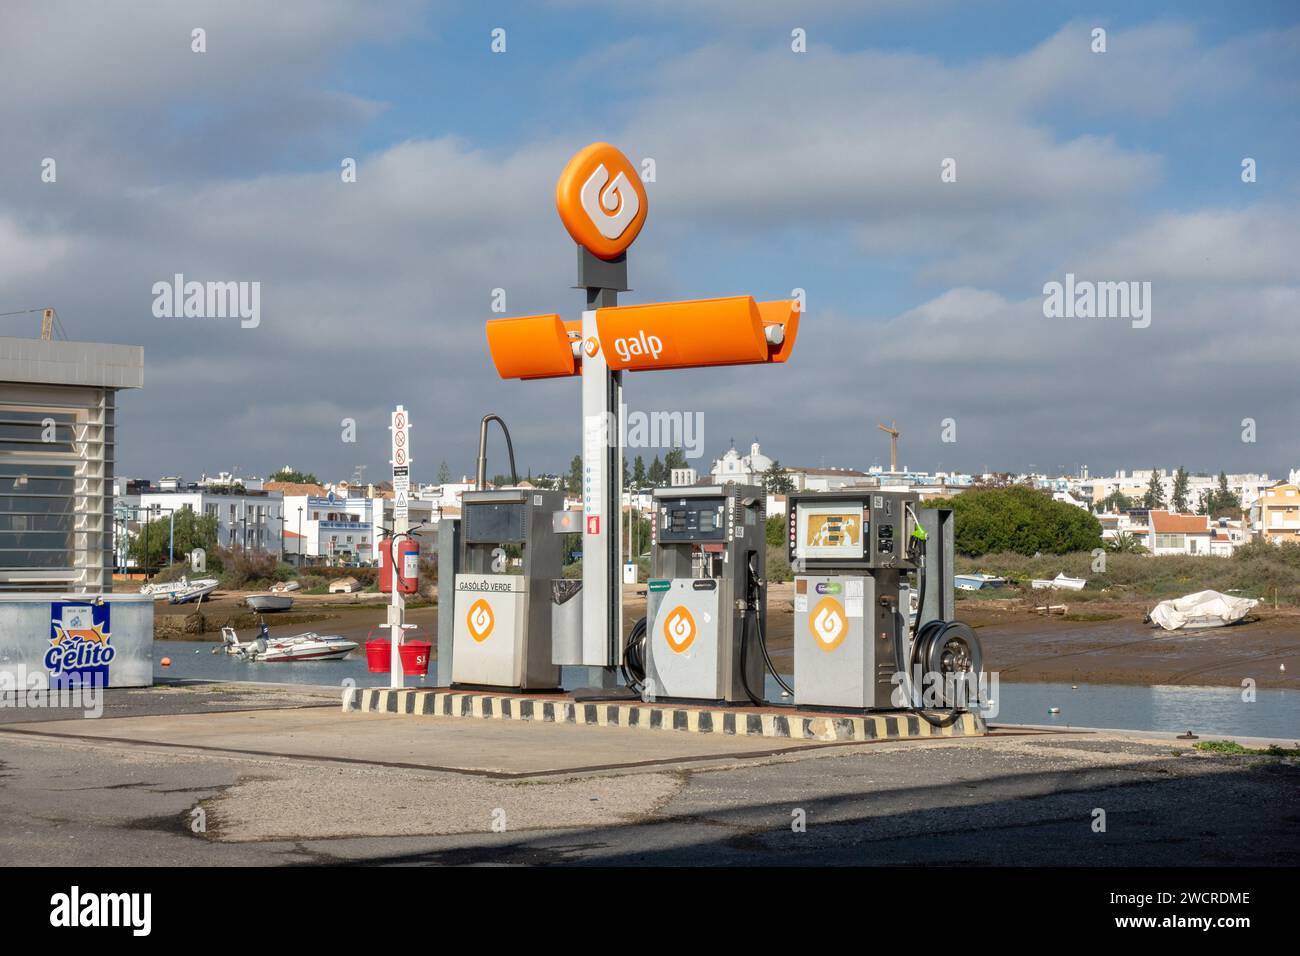 Galp Petrol Station At The Gilao River Tavira Portugal Serving Marine Boats And Cars January 2, 2024 Stock Photo